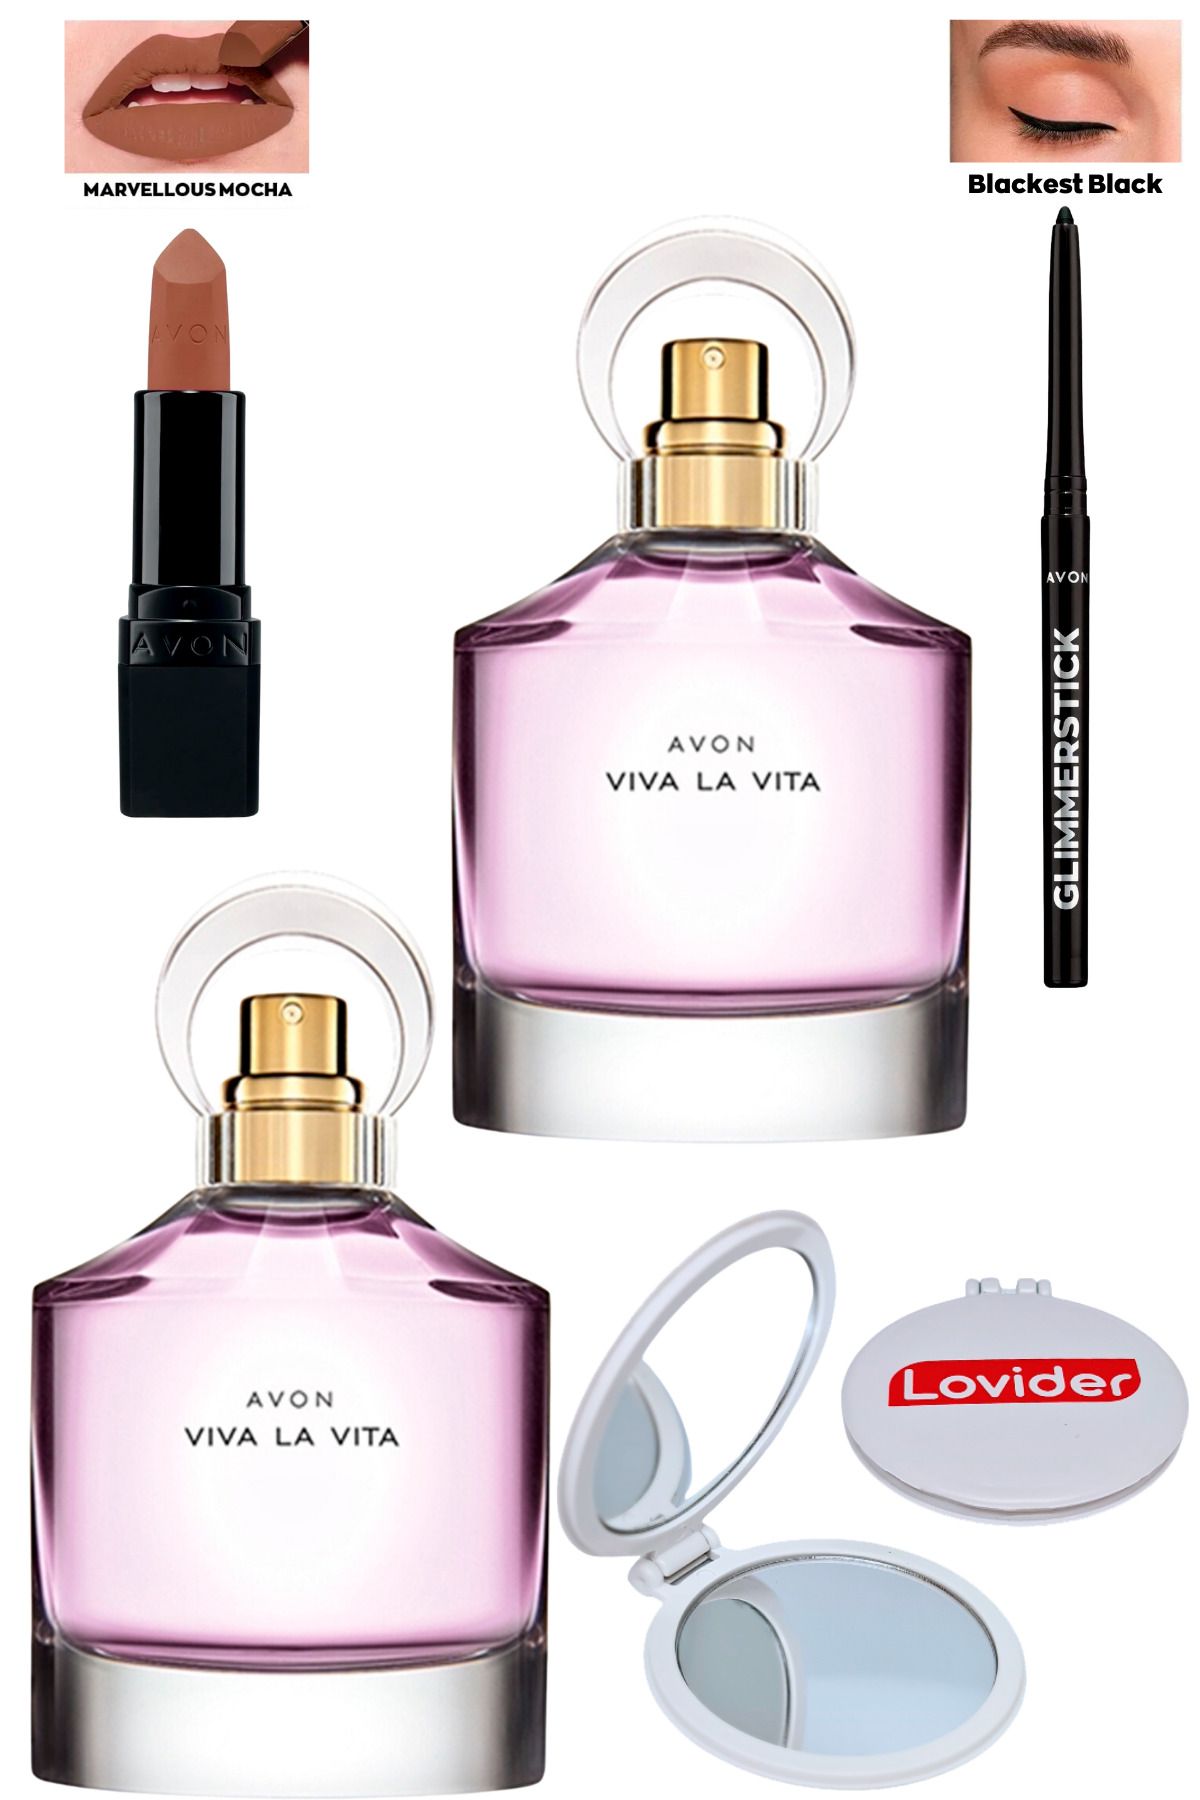 Avon Viva La Vita Kadın Parfüm 50ml x 2 Adet + Marvellous Mocha Ruj + Siyah Göz Kalemi + Lovider Ayna